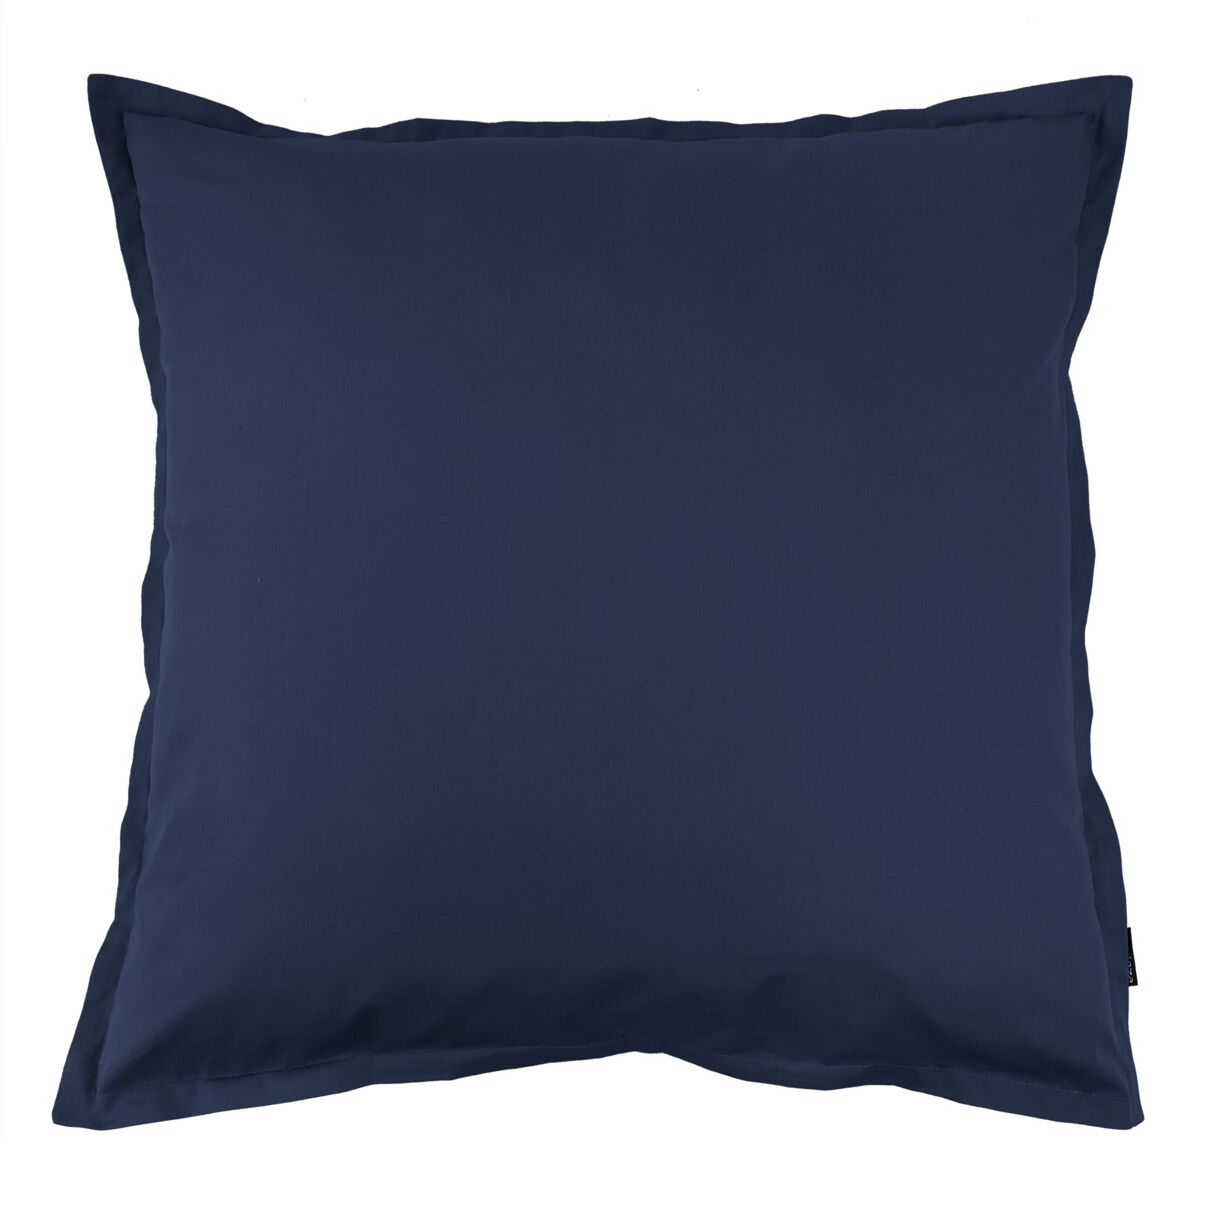 Funda de almohada cuadrada de percal de algodón (80 x 80 cm) Cali Azul marino